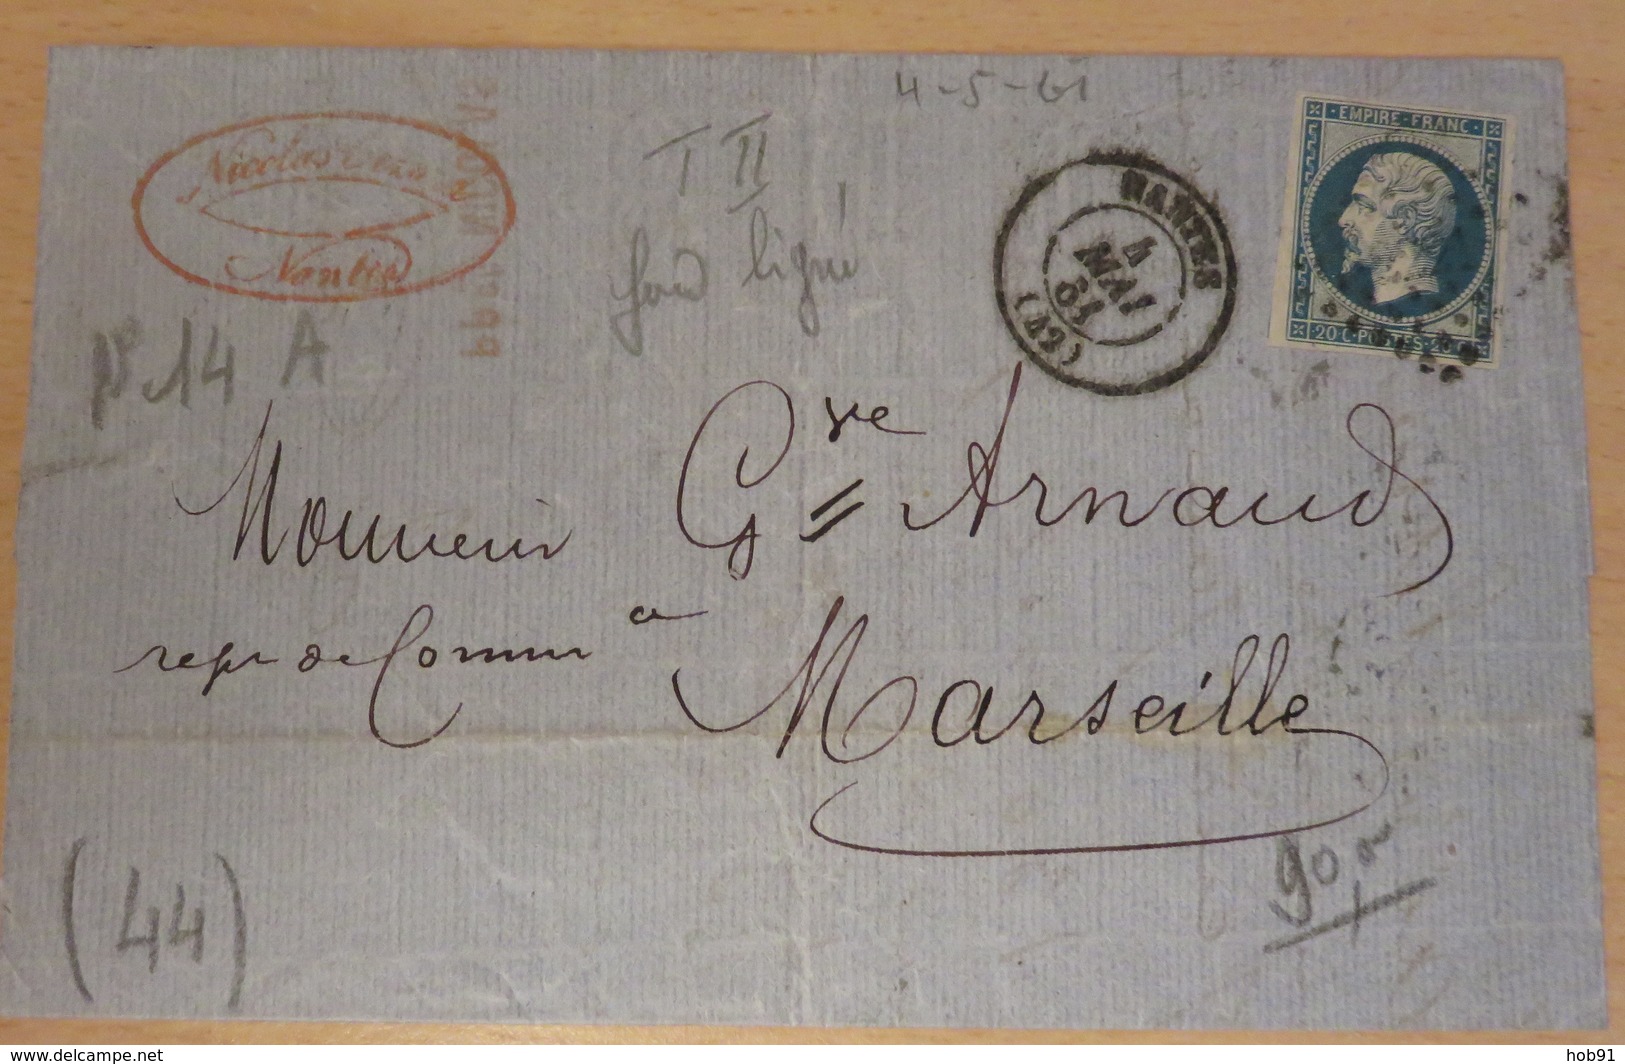 LAC, N°14B, Nantes à Marseille, 04-0-61 (B42-L6) - 1849-1876: Classic Period